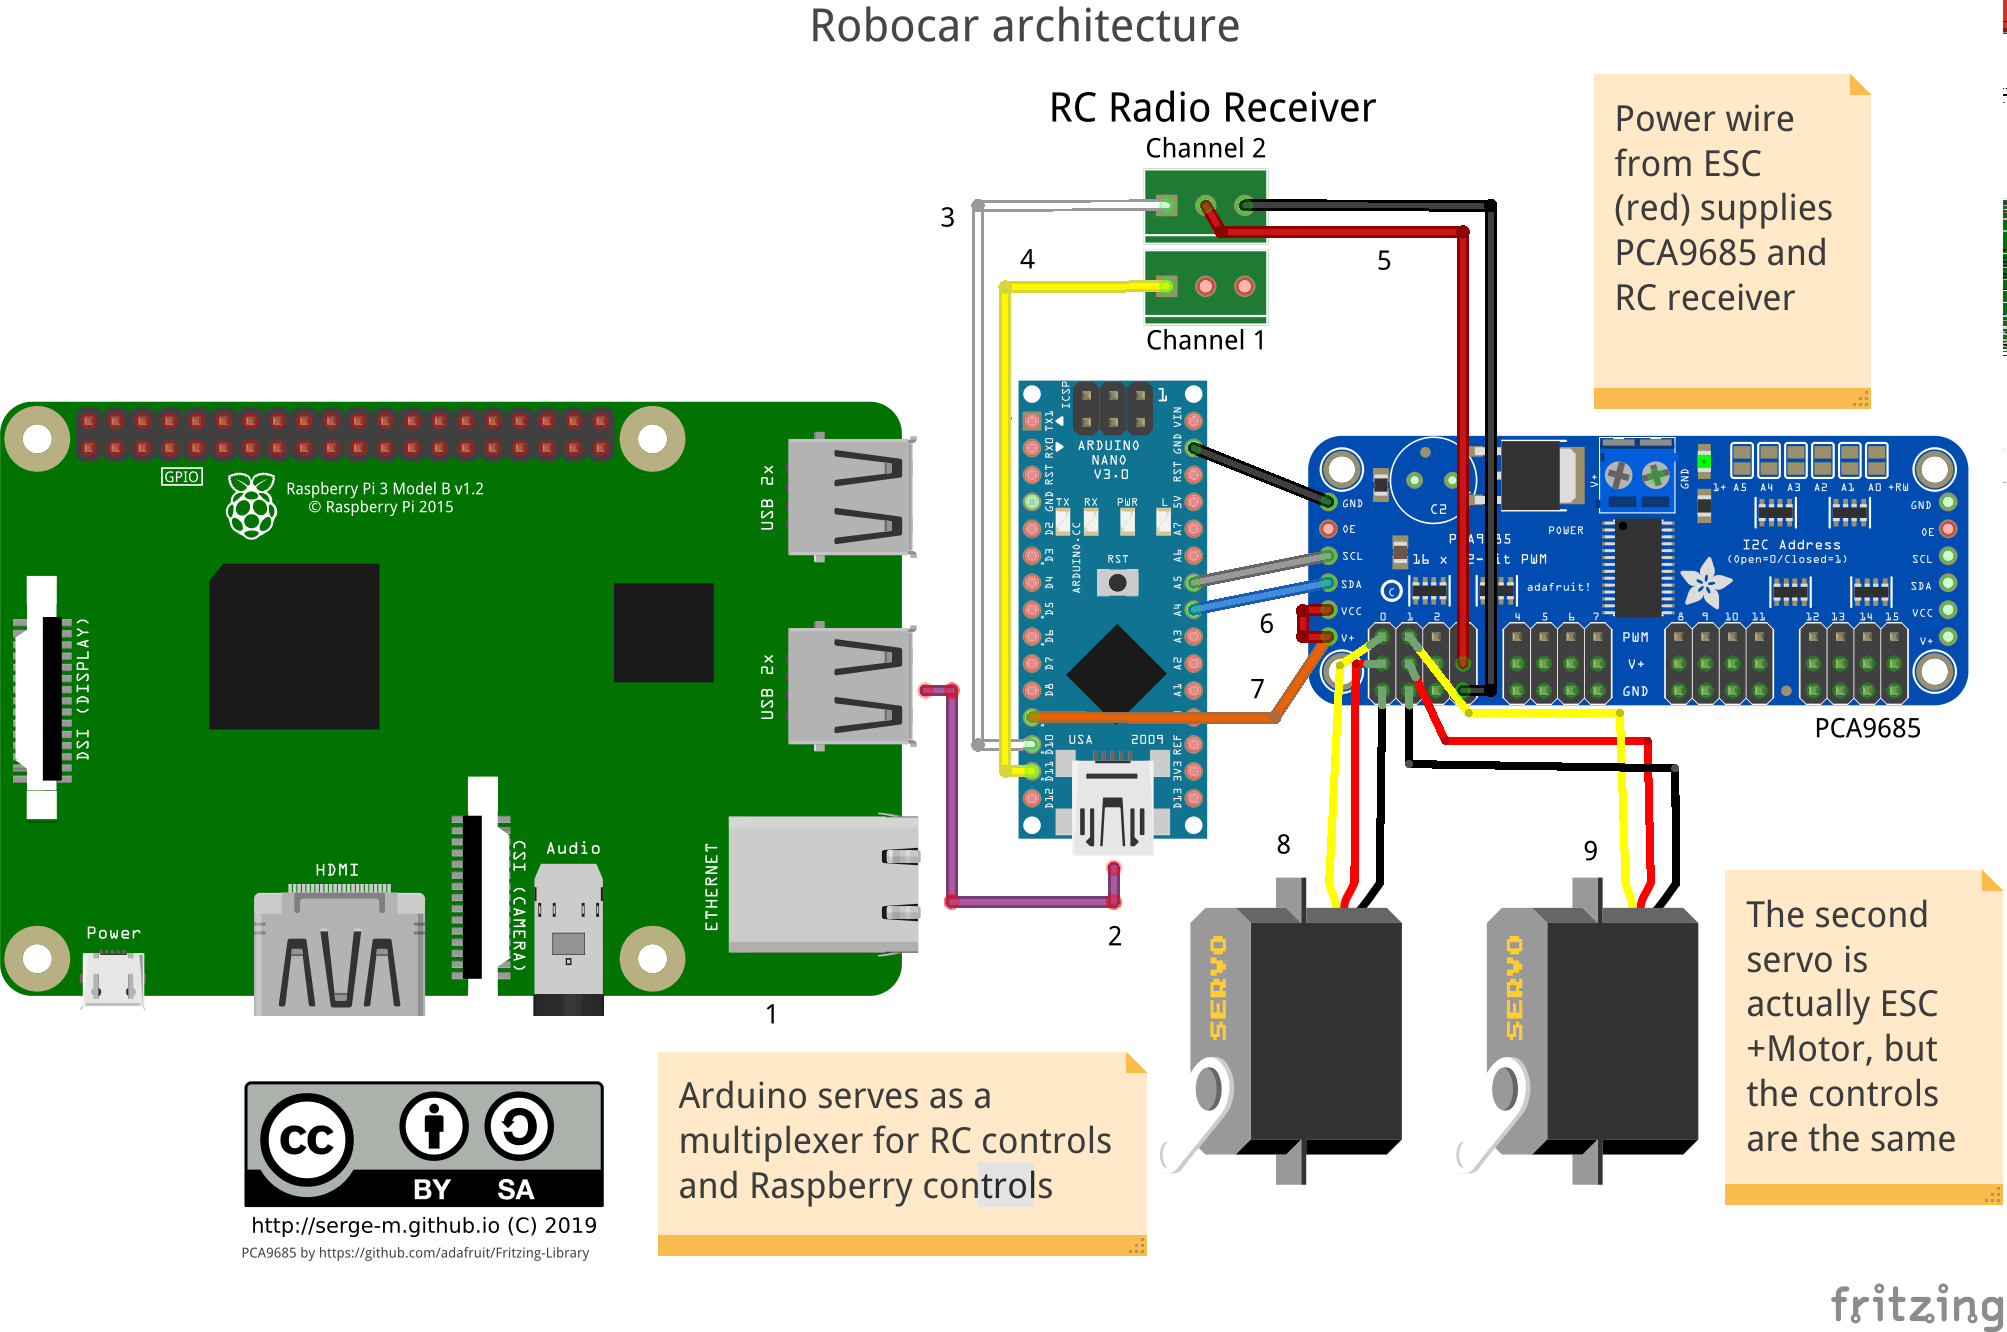 sergem robocar architecture with arduino